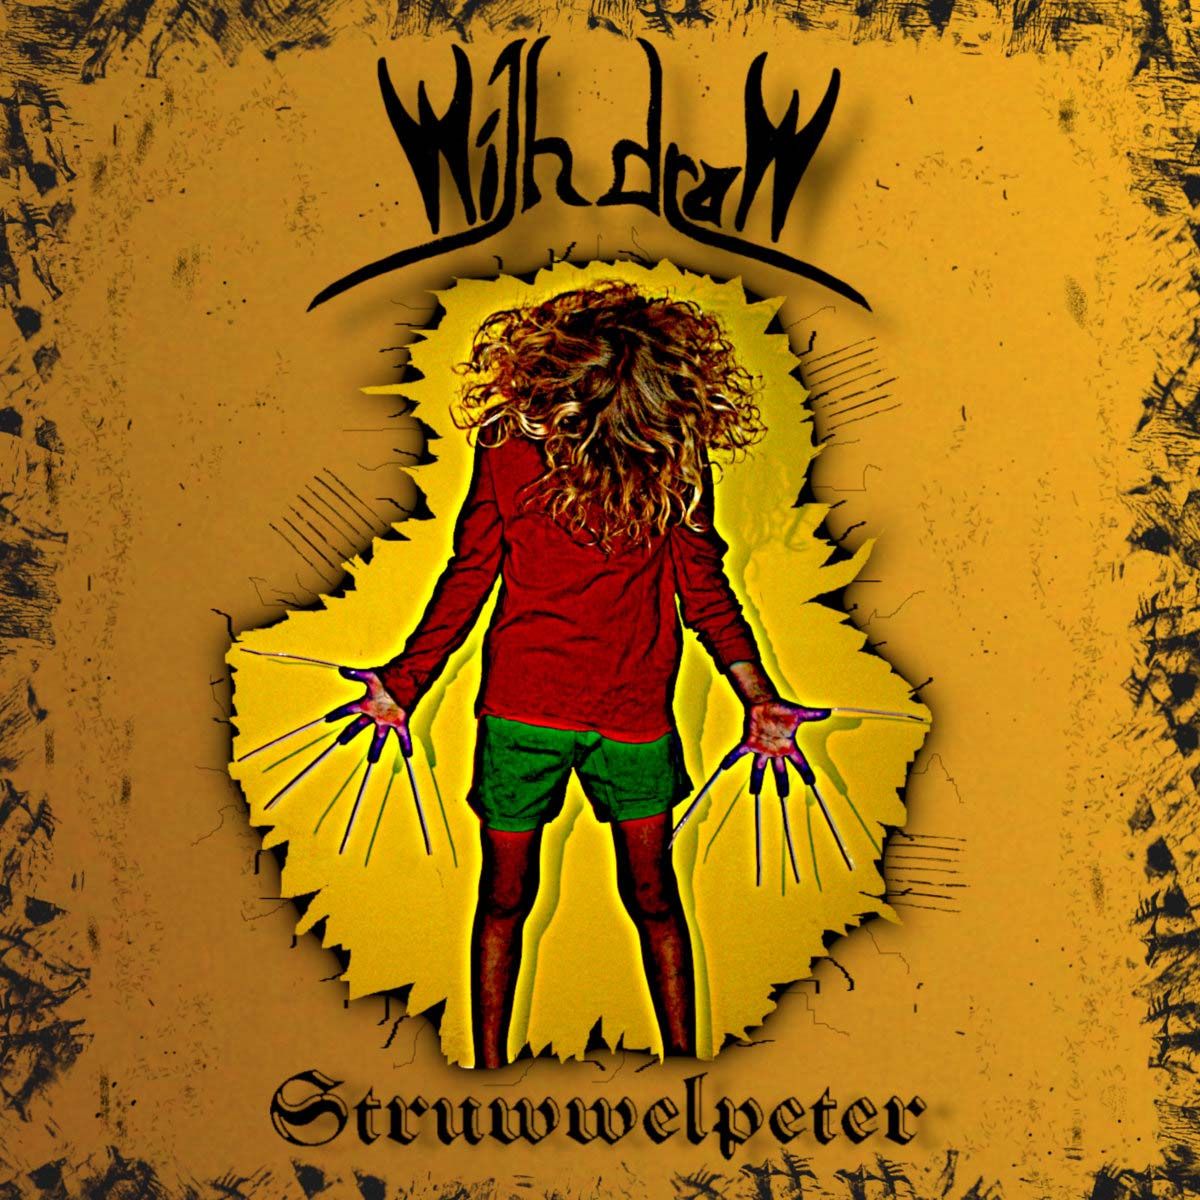 Withdraw - Struwwelpeter